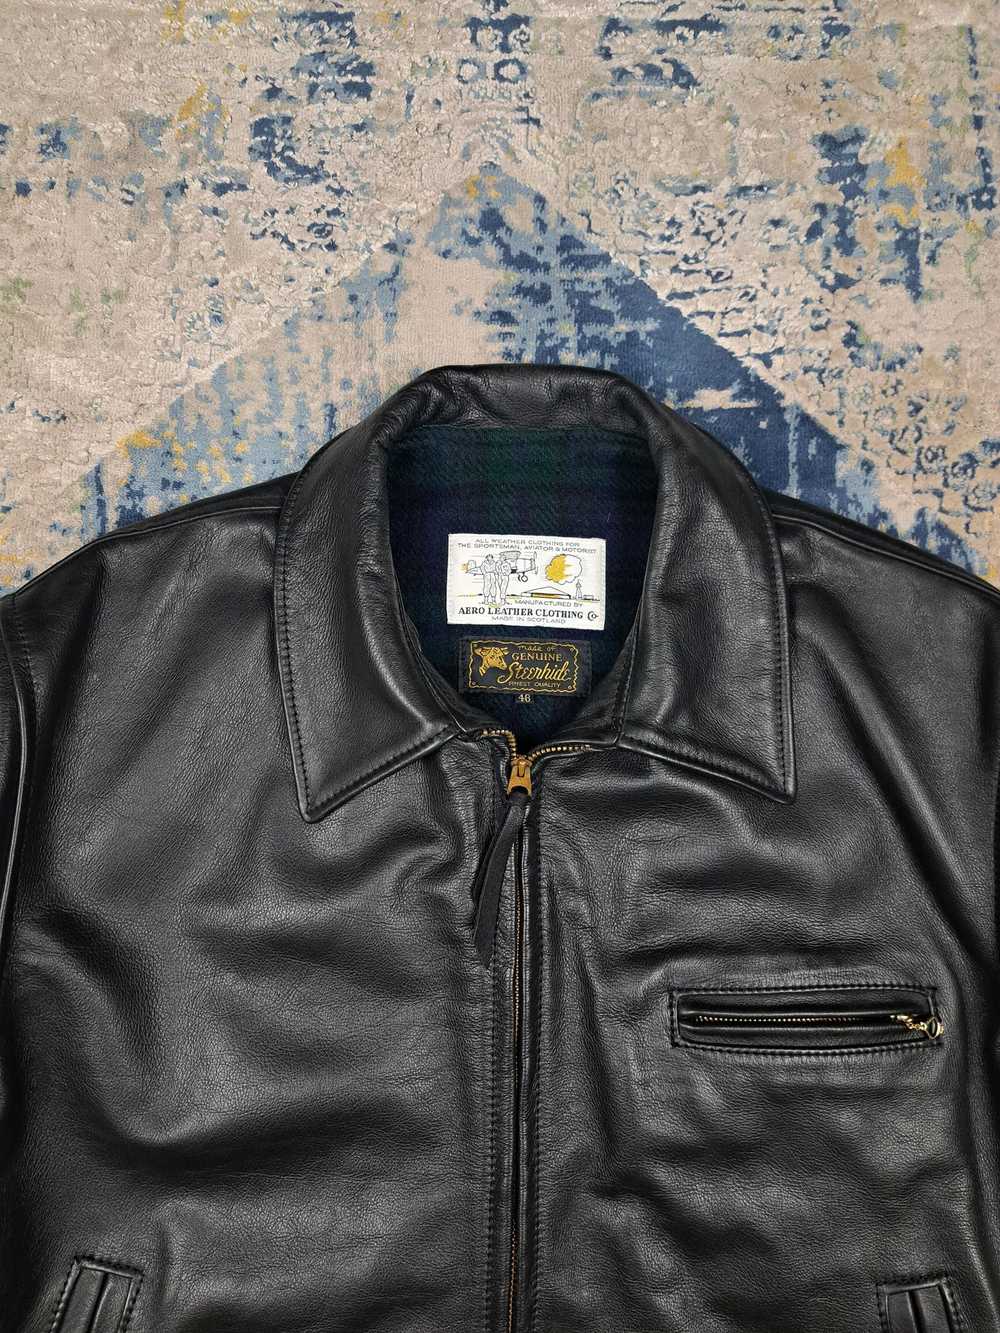 Aero Leather × Genuine Leather × Luxury Aero High… - image 7